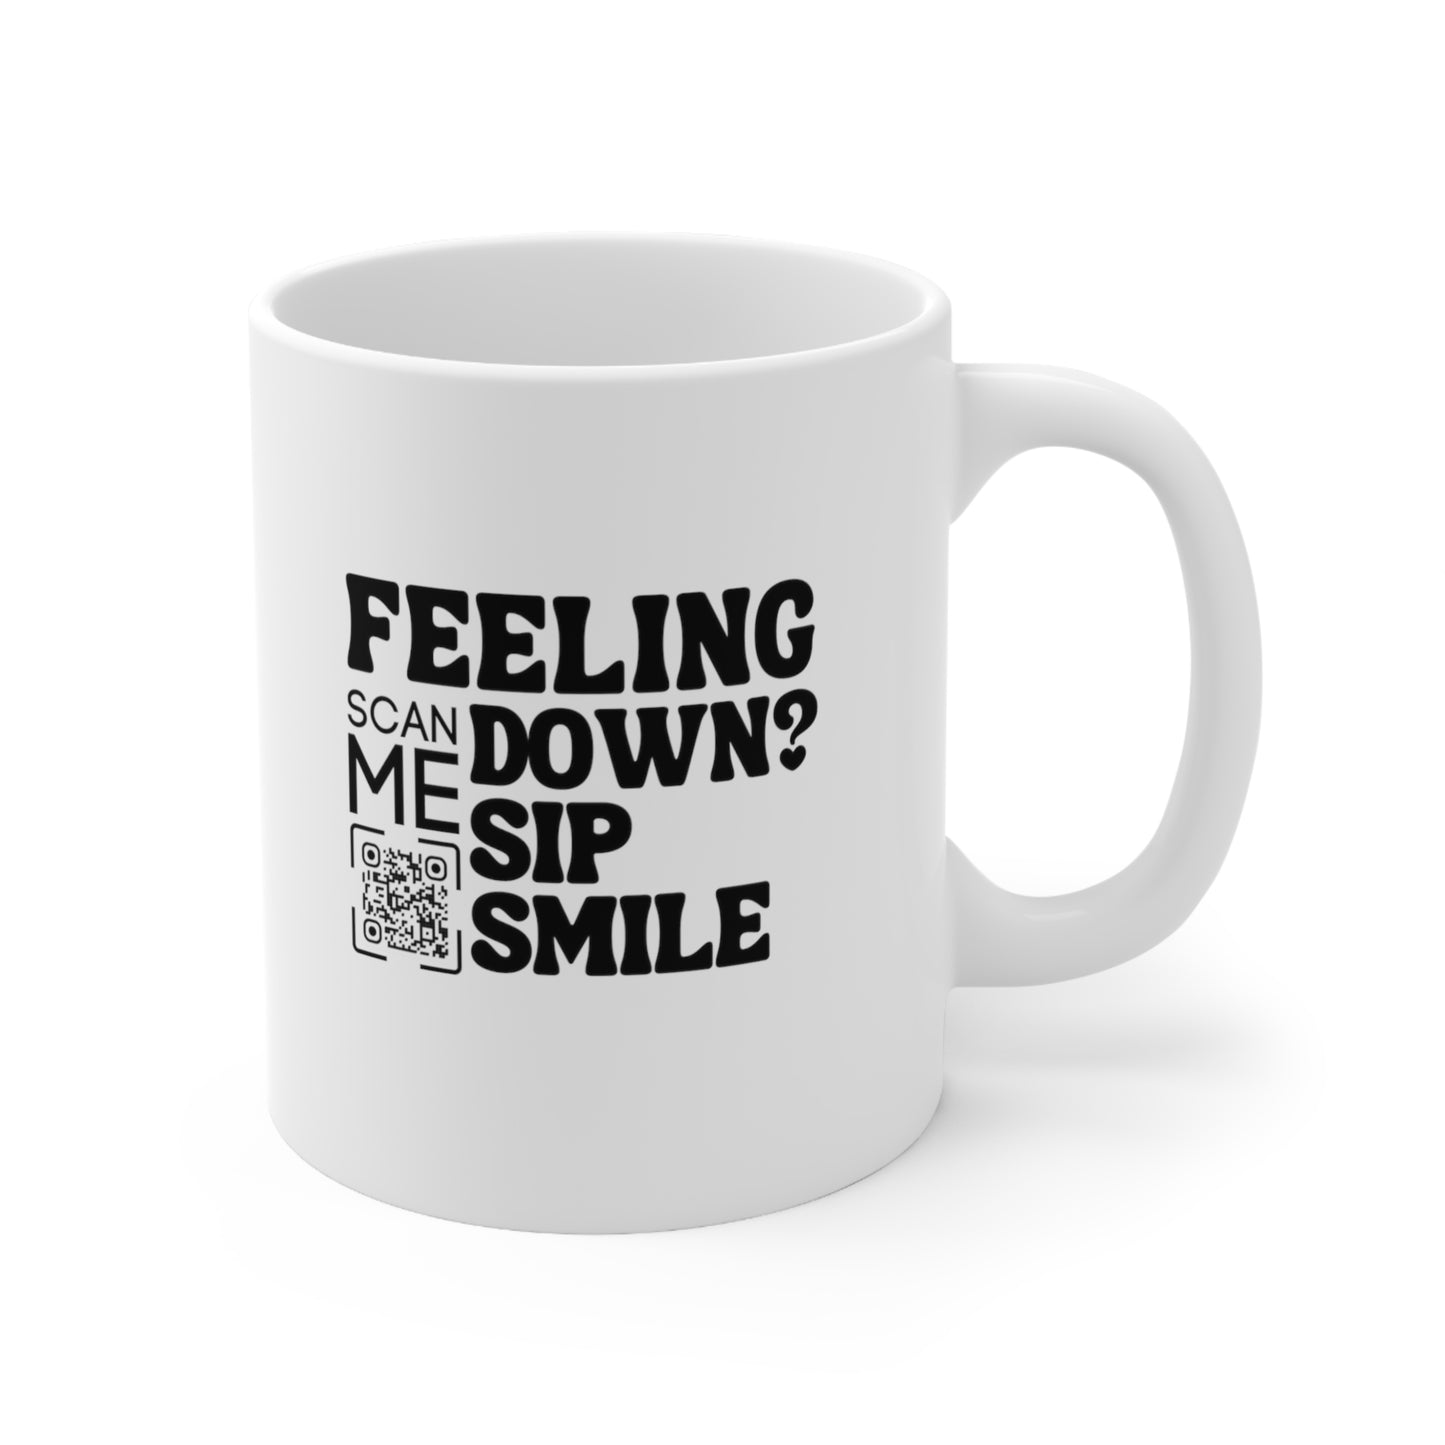 Feeling down? 2 in 1 Magic Mug: A Digital Bonus for Your Daily Dose of Upliftment